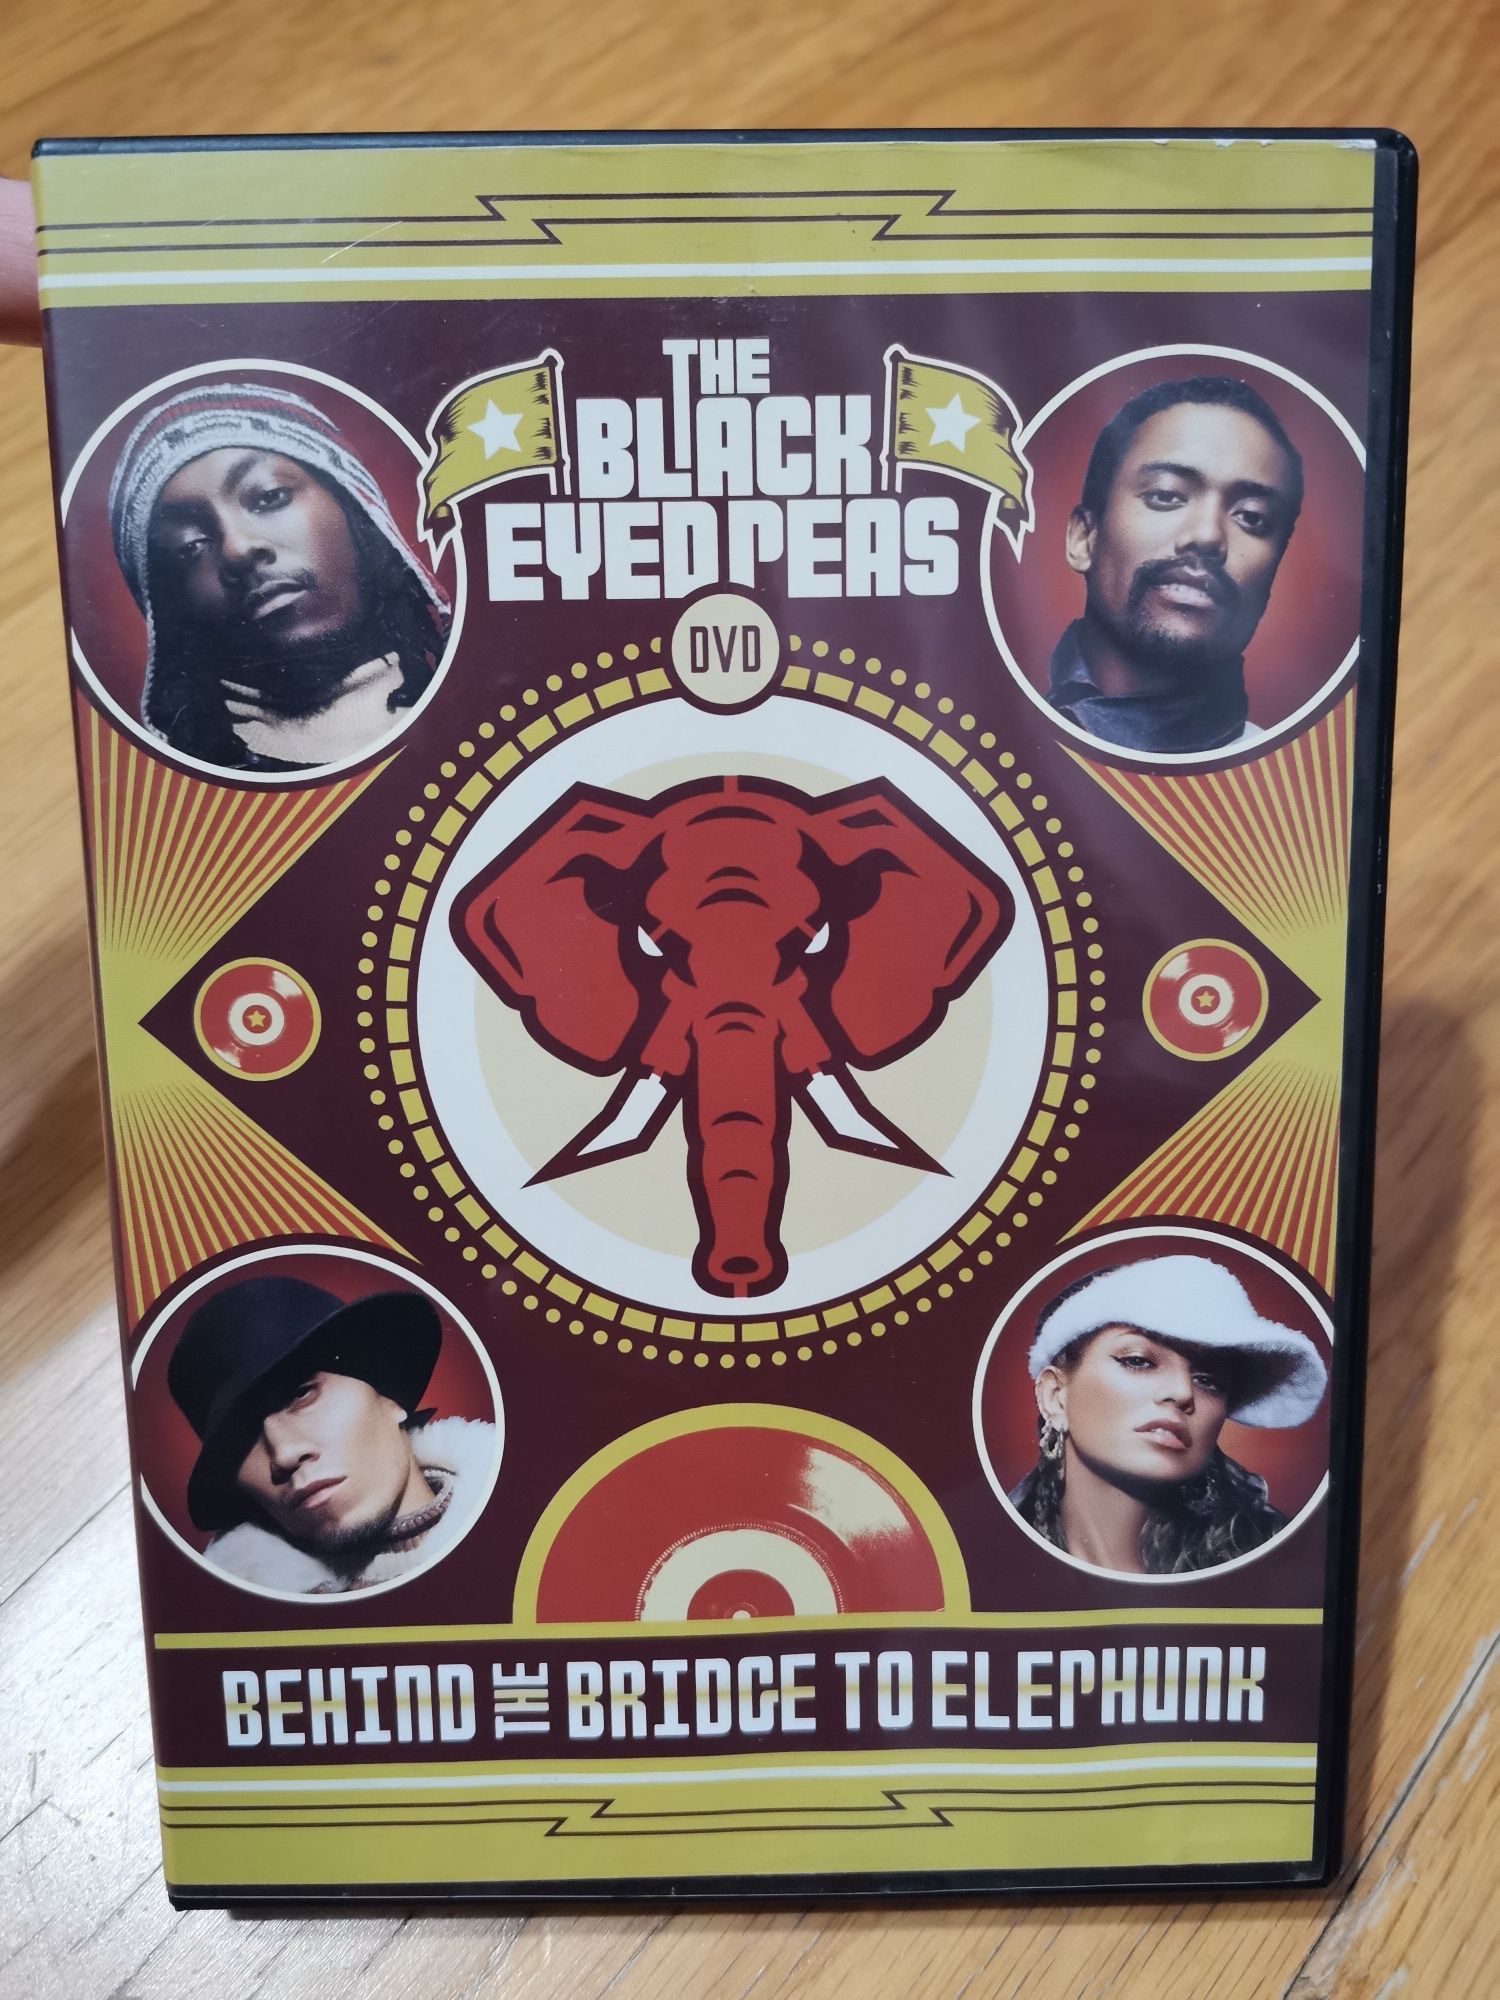 The black eyed peas DVD singles, behind the bridge to elephunk